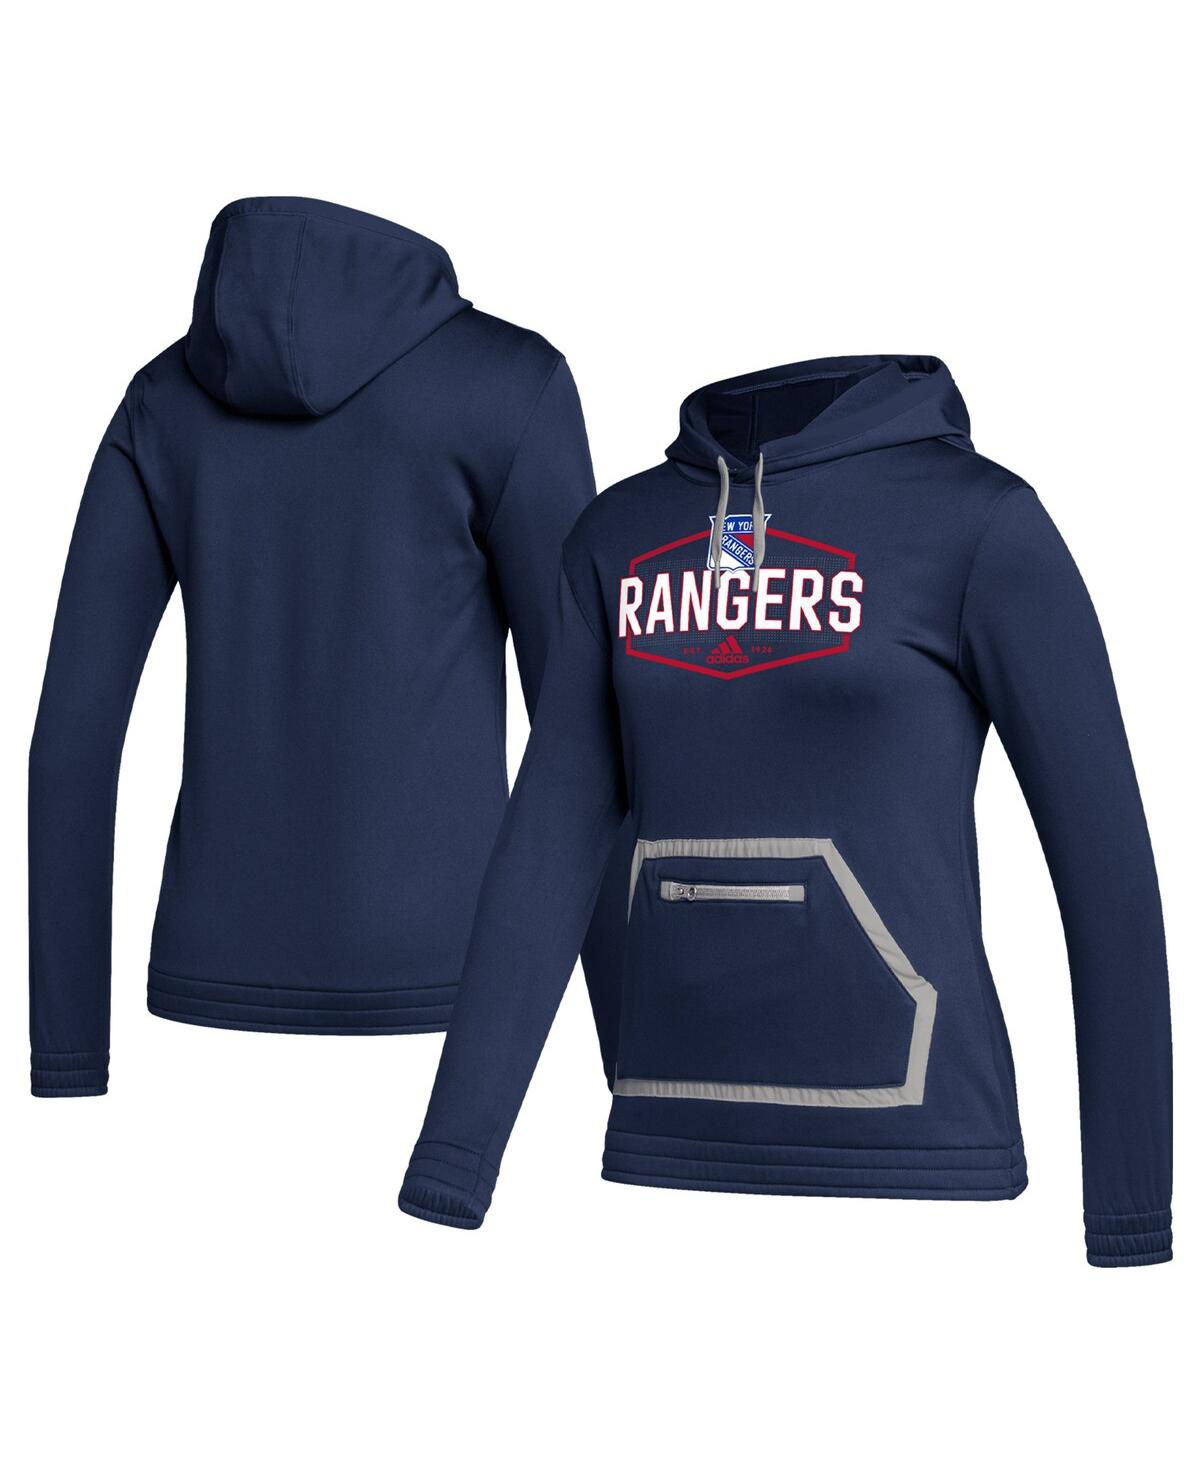 Women's adidas Navy New York Rangers Team Issue Pullover Hoodie - Navy